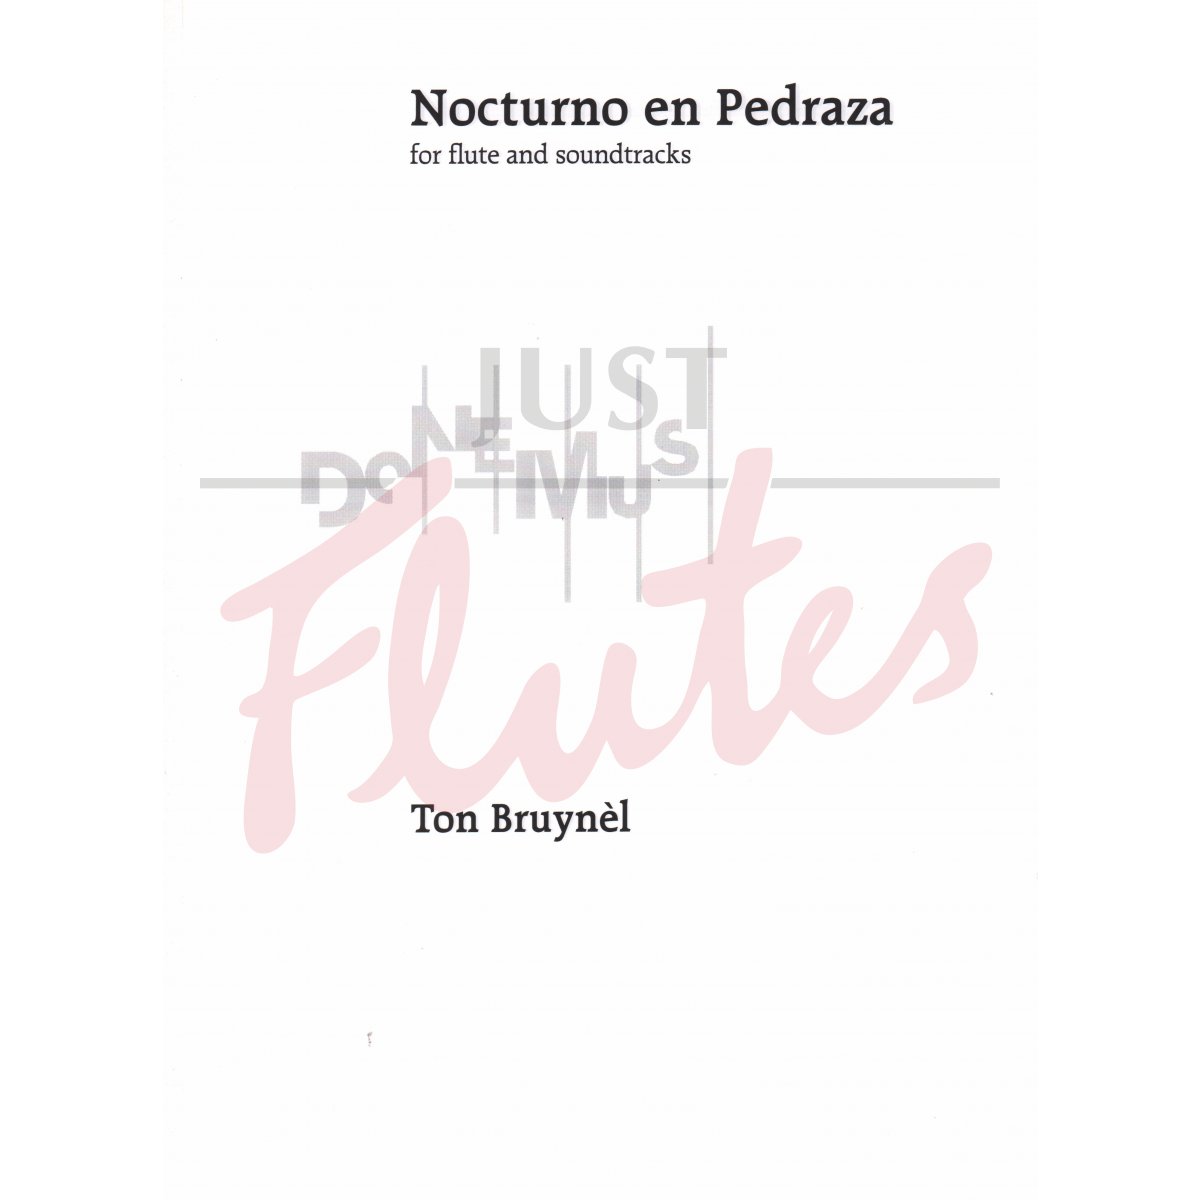 Nocturno en Pedraza for flute and soundtracks